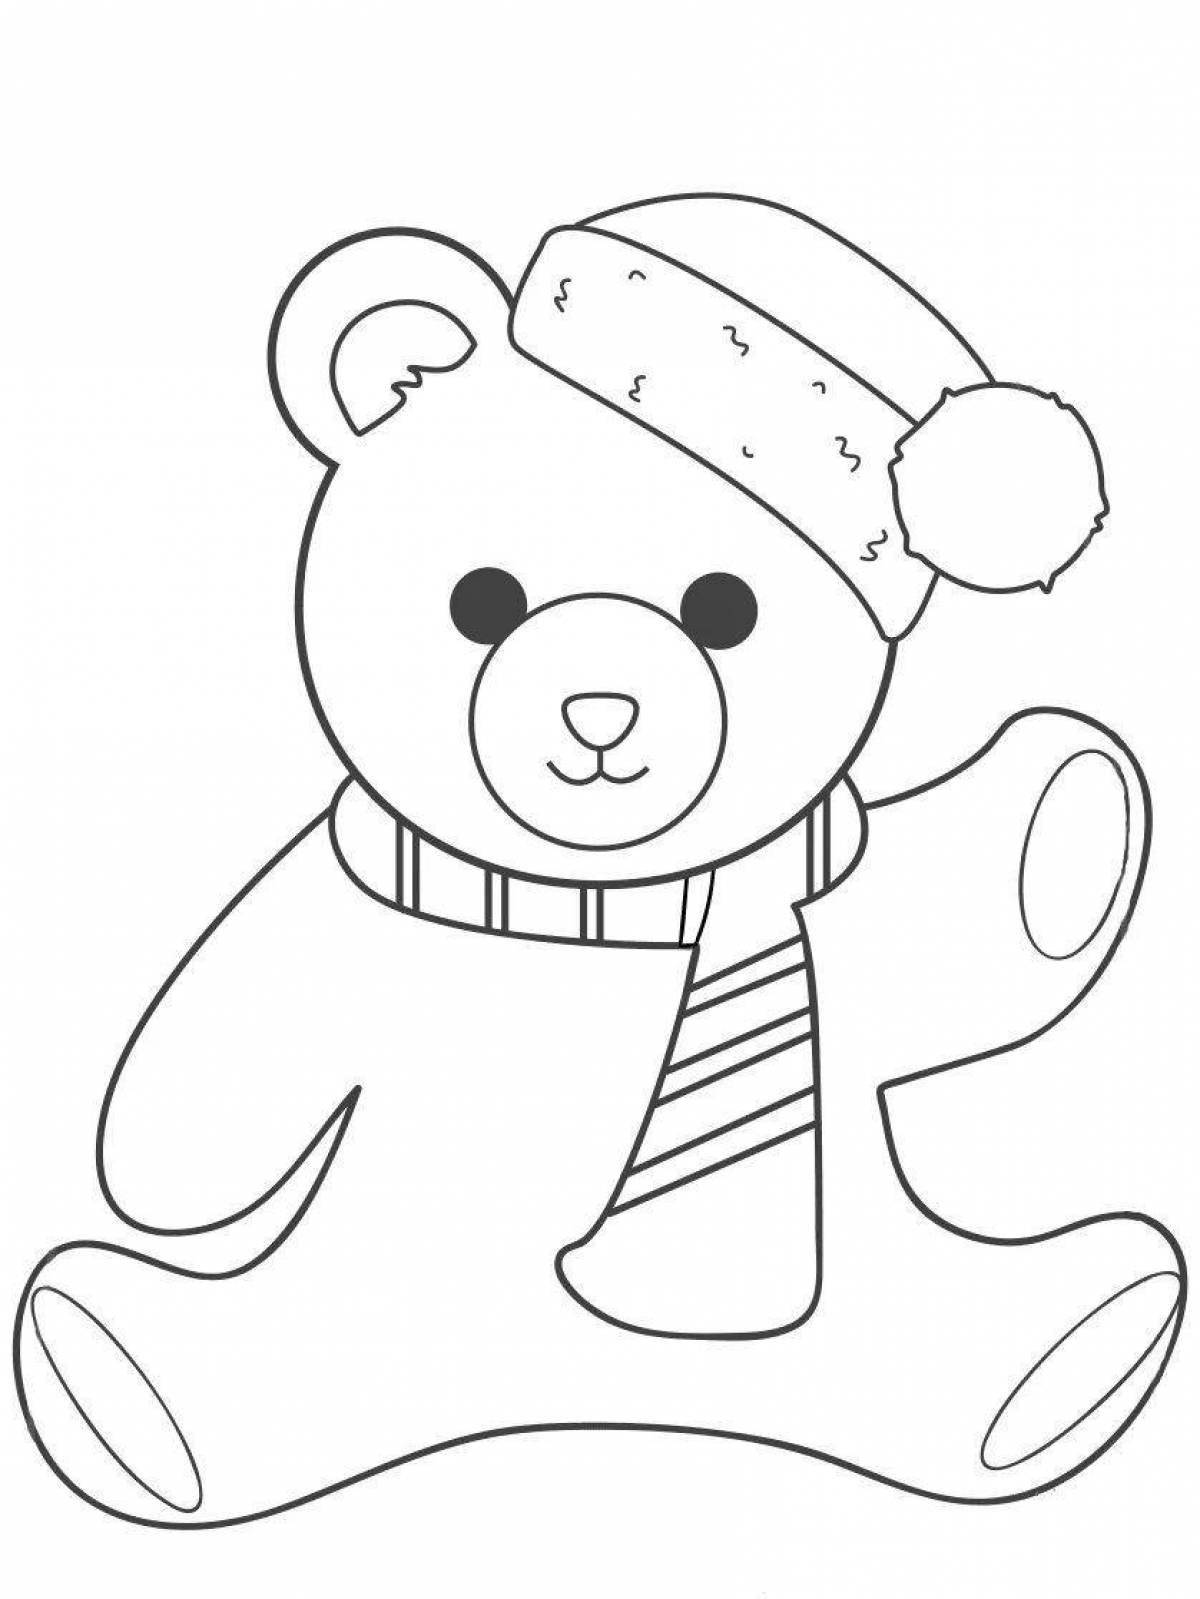 Christmas bear coloring page